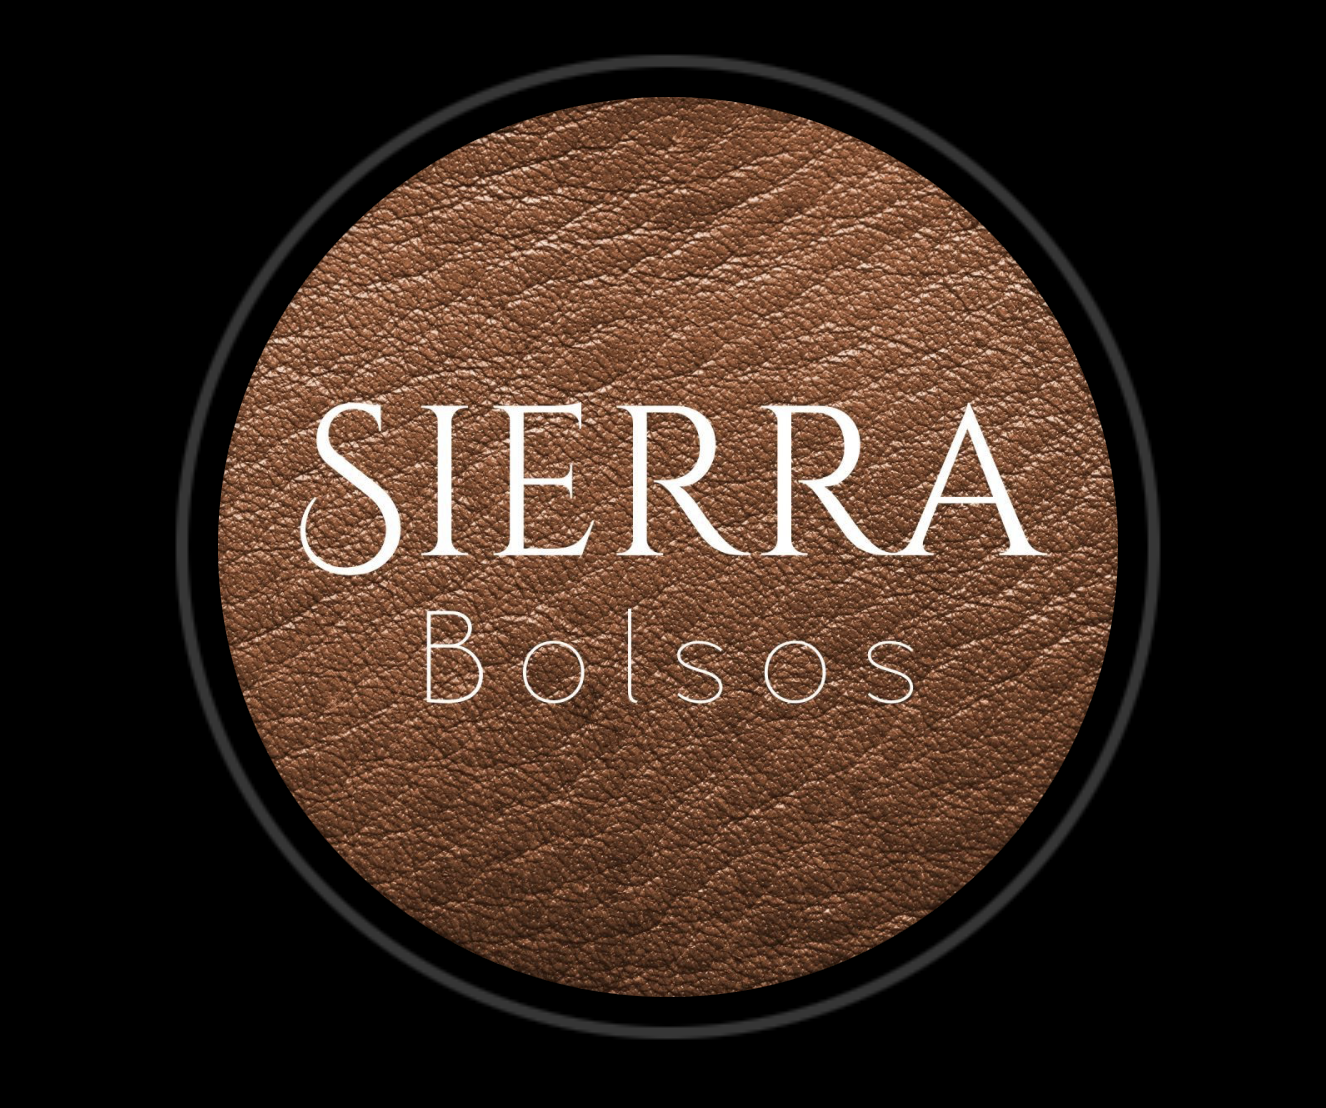 Sierra Bolsos